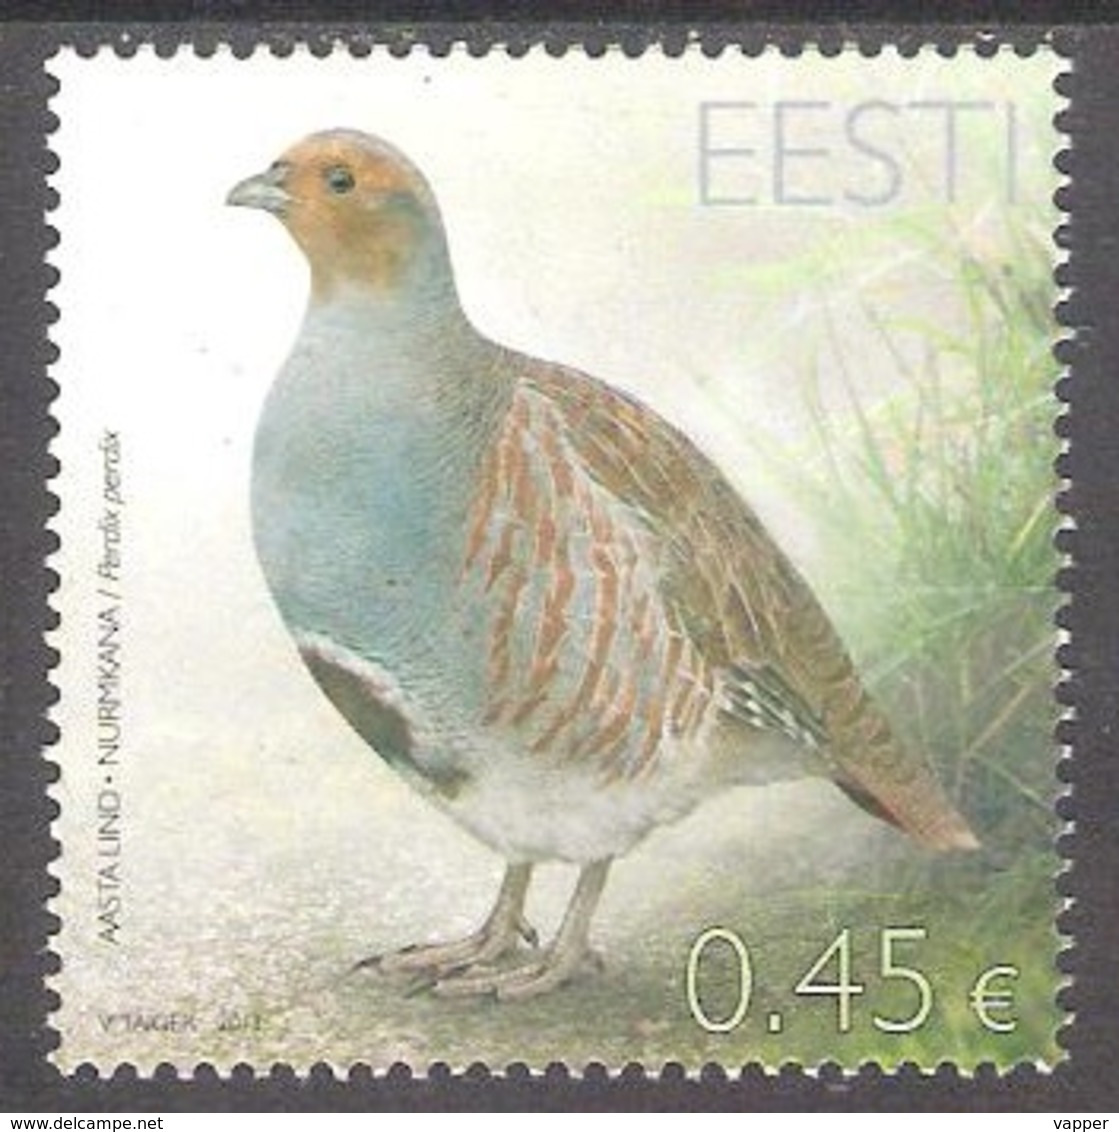 Bird Of The Year 2013 Estonia MNH Stamp  Partridge Mi 757 - Perdrix, Cailles